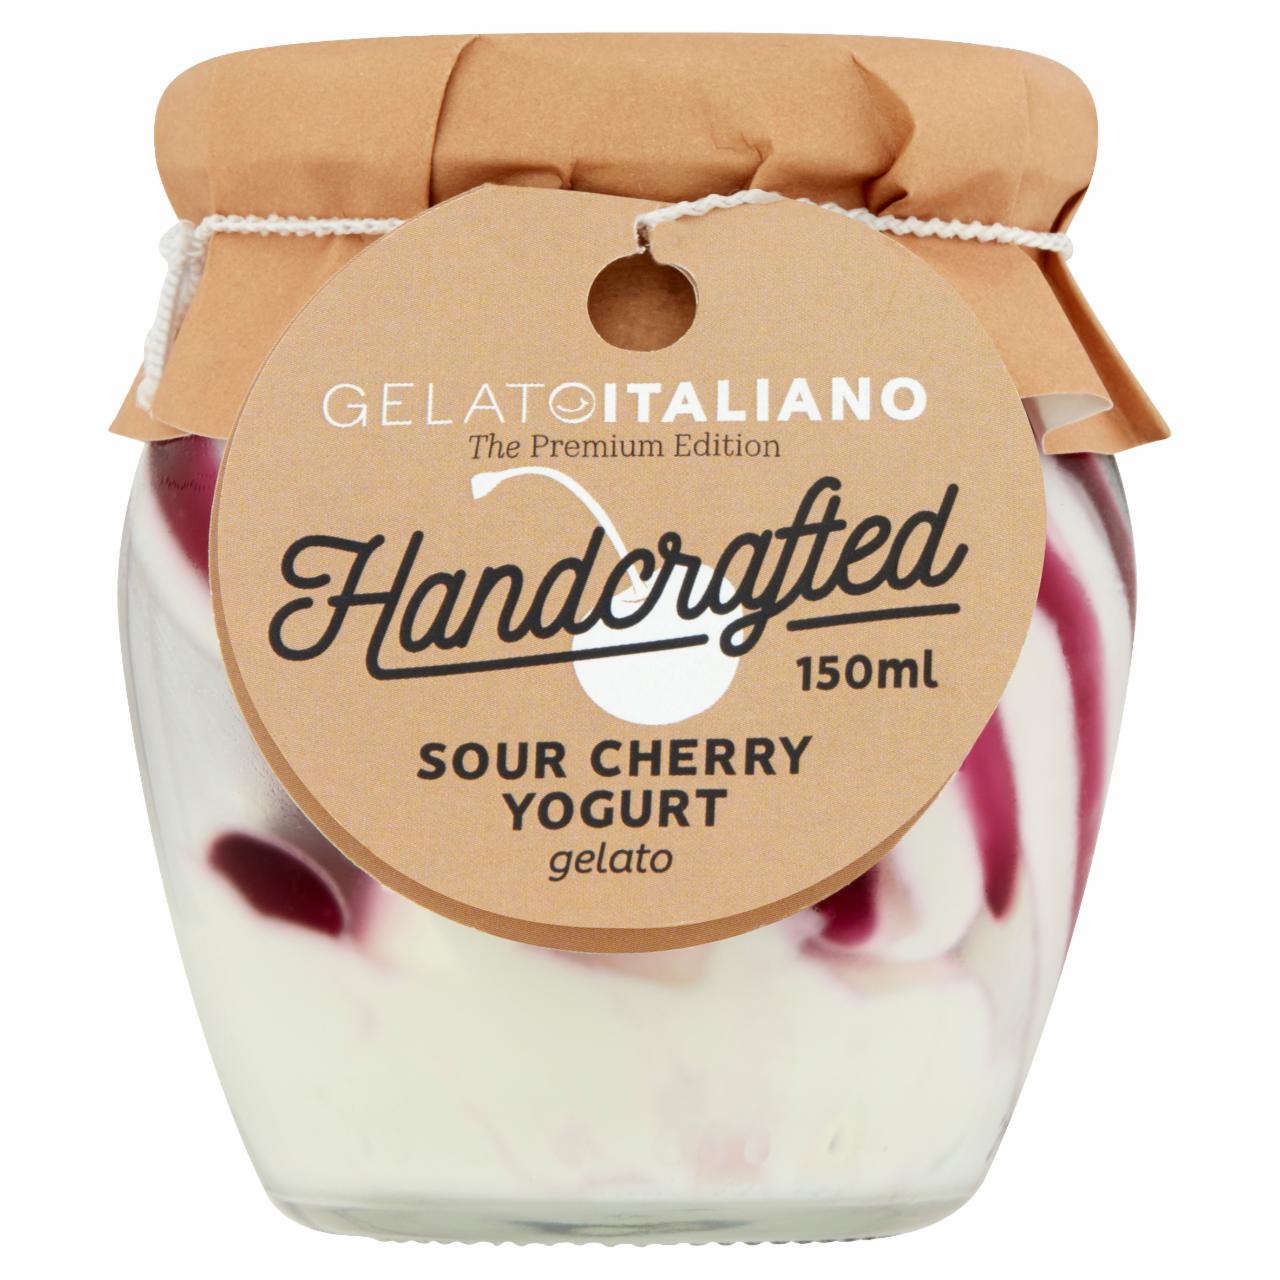 Képek - Gelato Italiano Handcrafted joghurt tejjégkrém meggy öntettel 150 ml